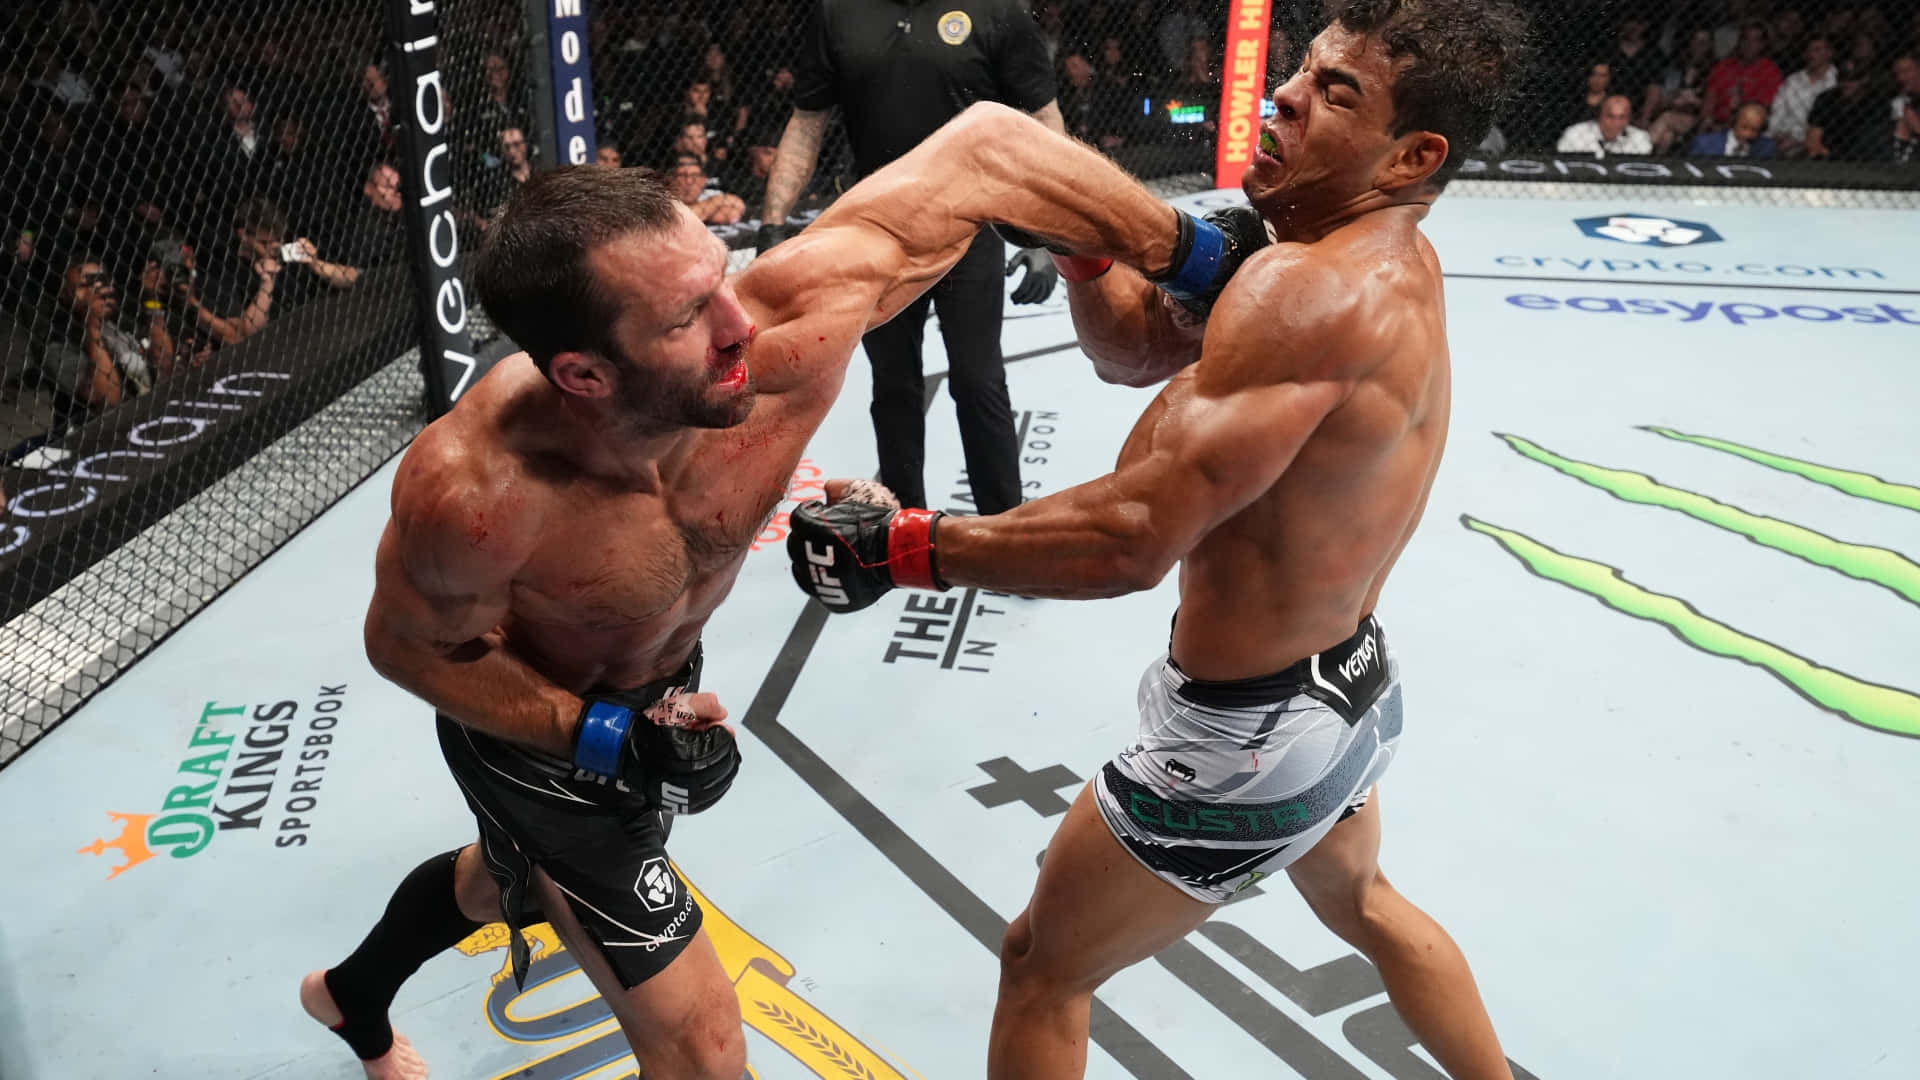 Amerikanske UFC-spiller Luke Rockhold med brasilianske atlet Paulo Costa i en kamp. Wallpaper